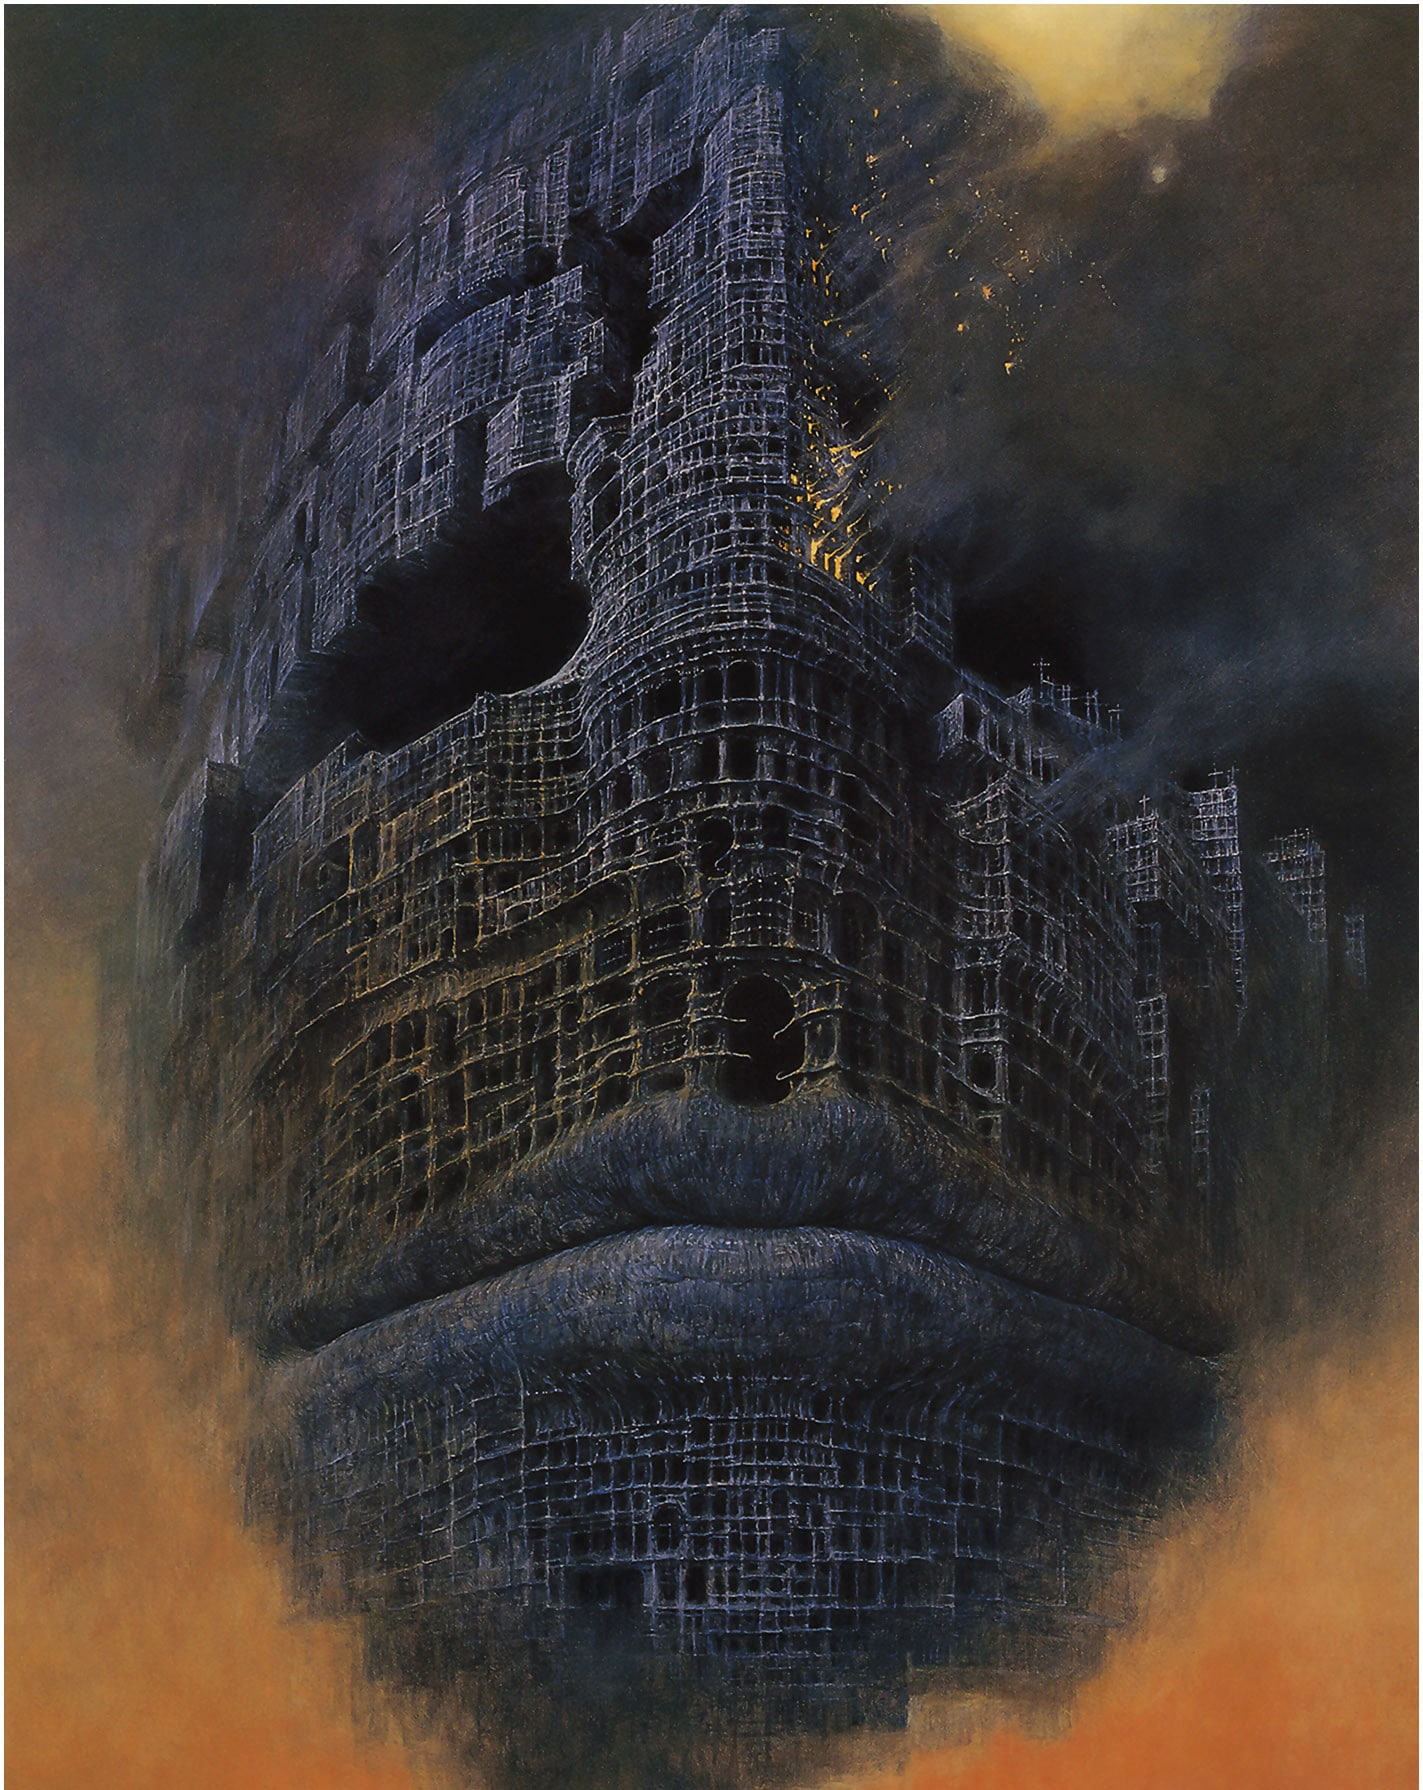 Zdzisław Beksiński, Artwork, Dark, Ghost, Building, Face, On Fire